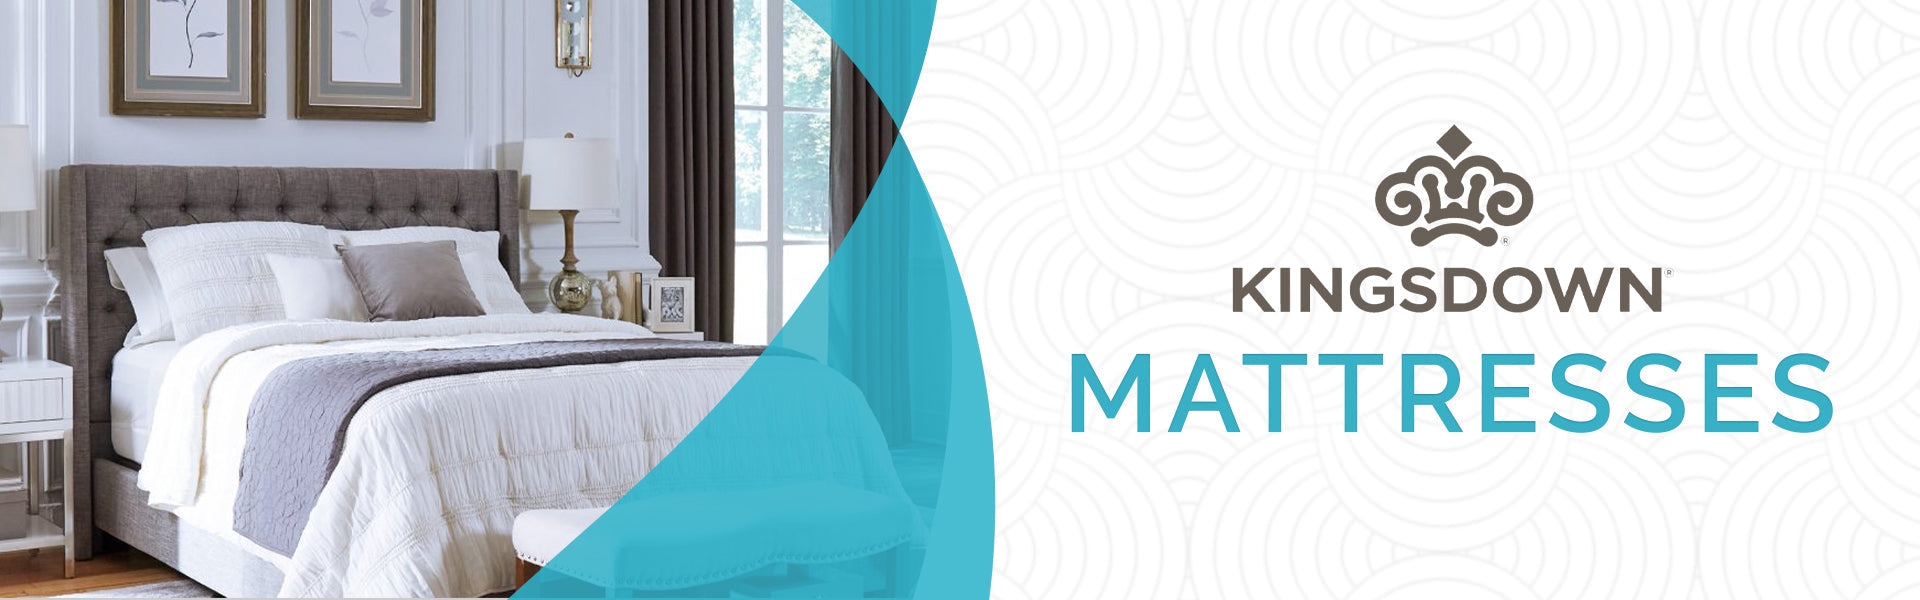 kingsdown mattress wuk pillows and comforter on top, kingsdown mattresses logo